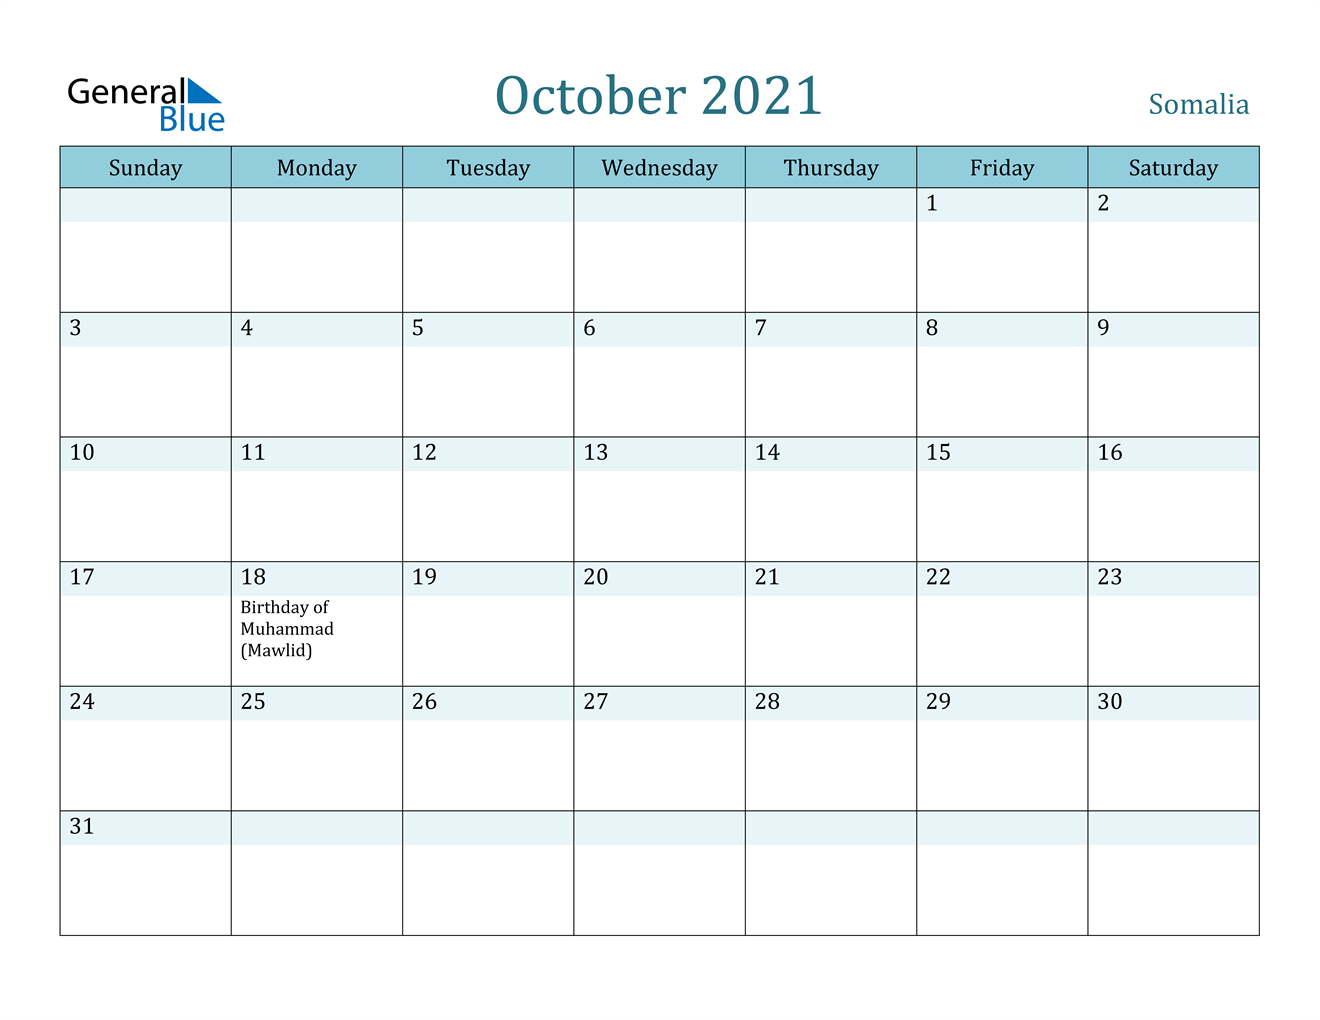 October 2021 Calendar - Somalia